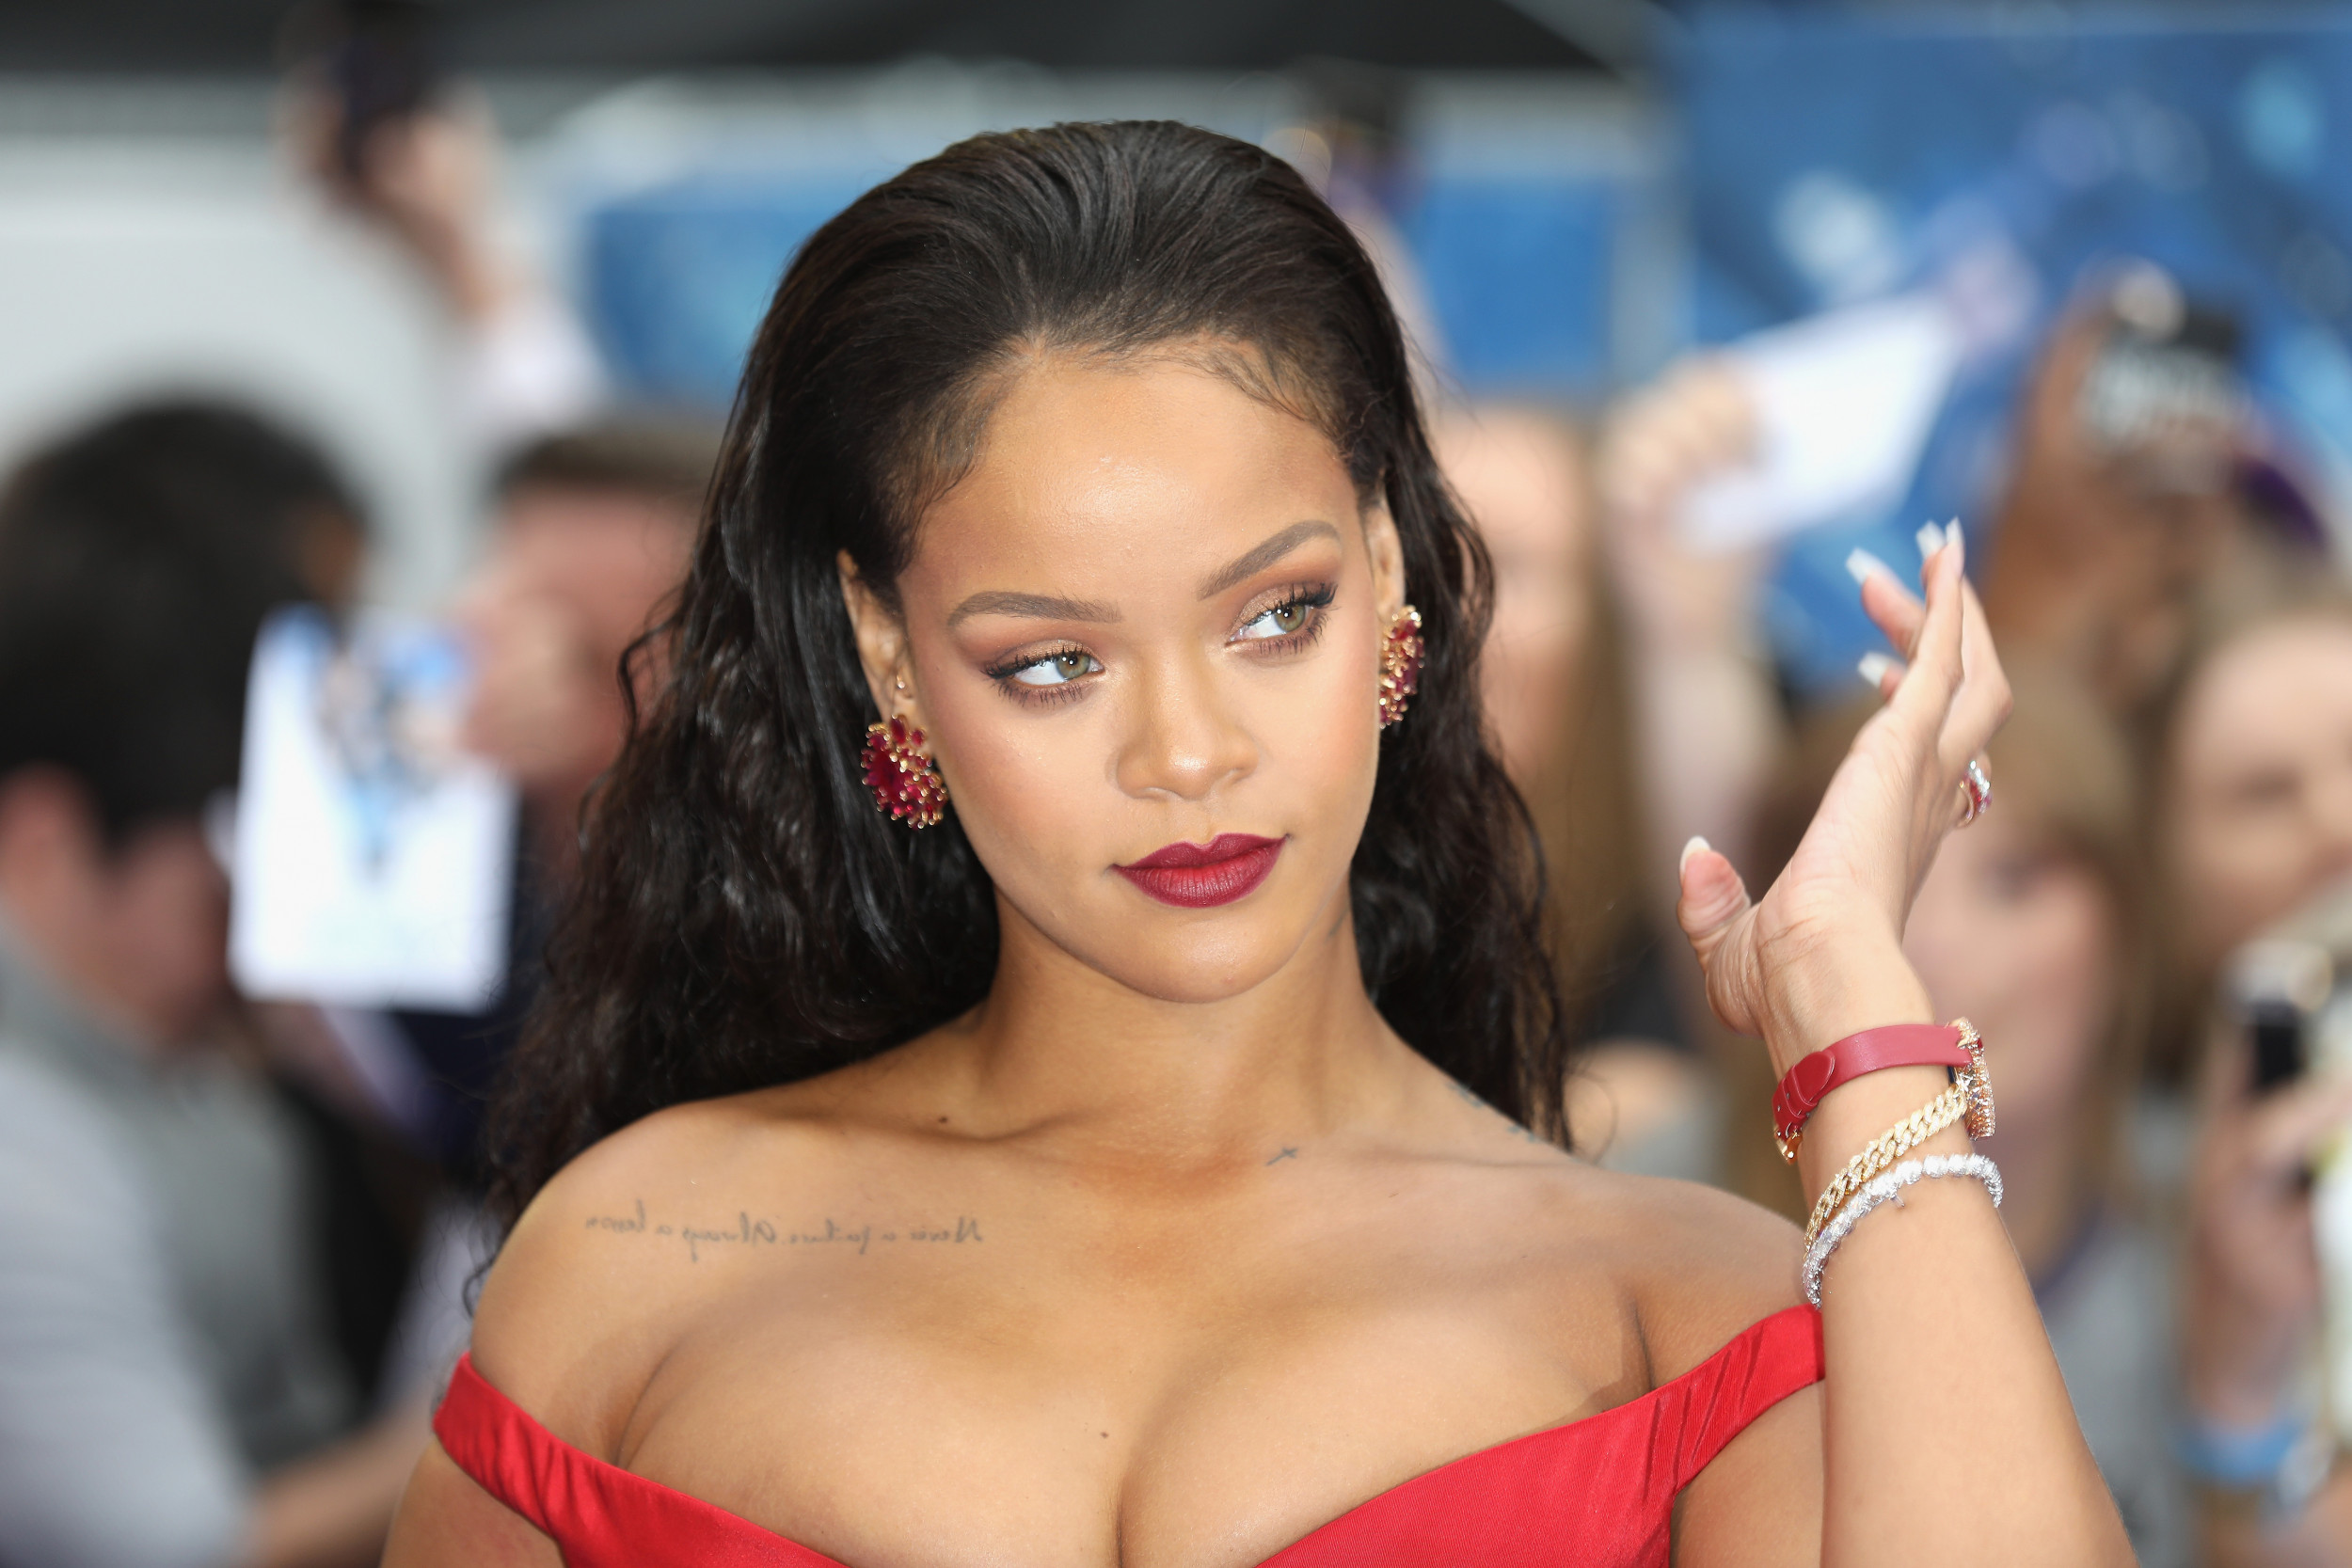 Rihanna to Perform Super Bowl After Rejecting 2019 Offer Over Kaepernick